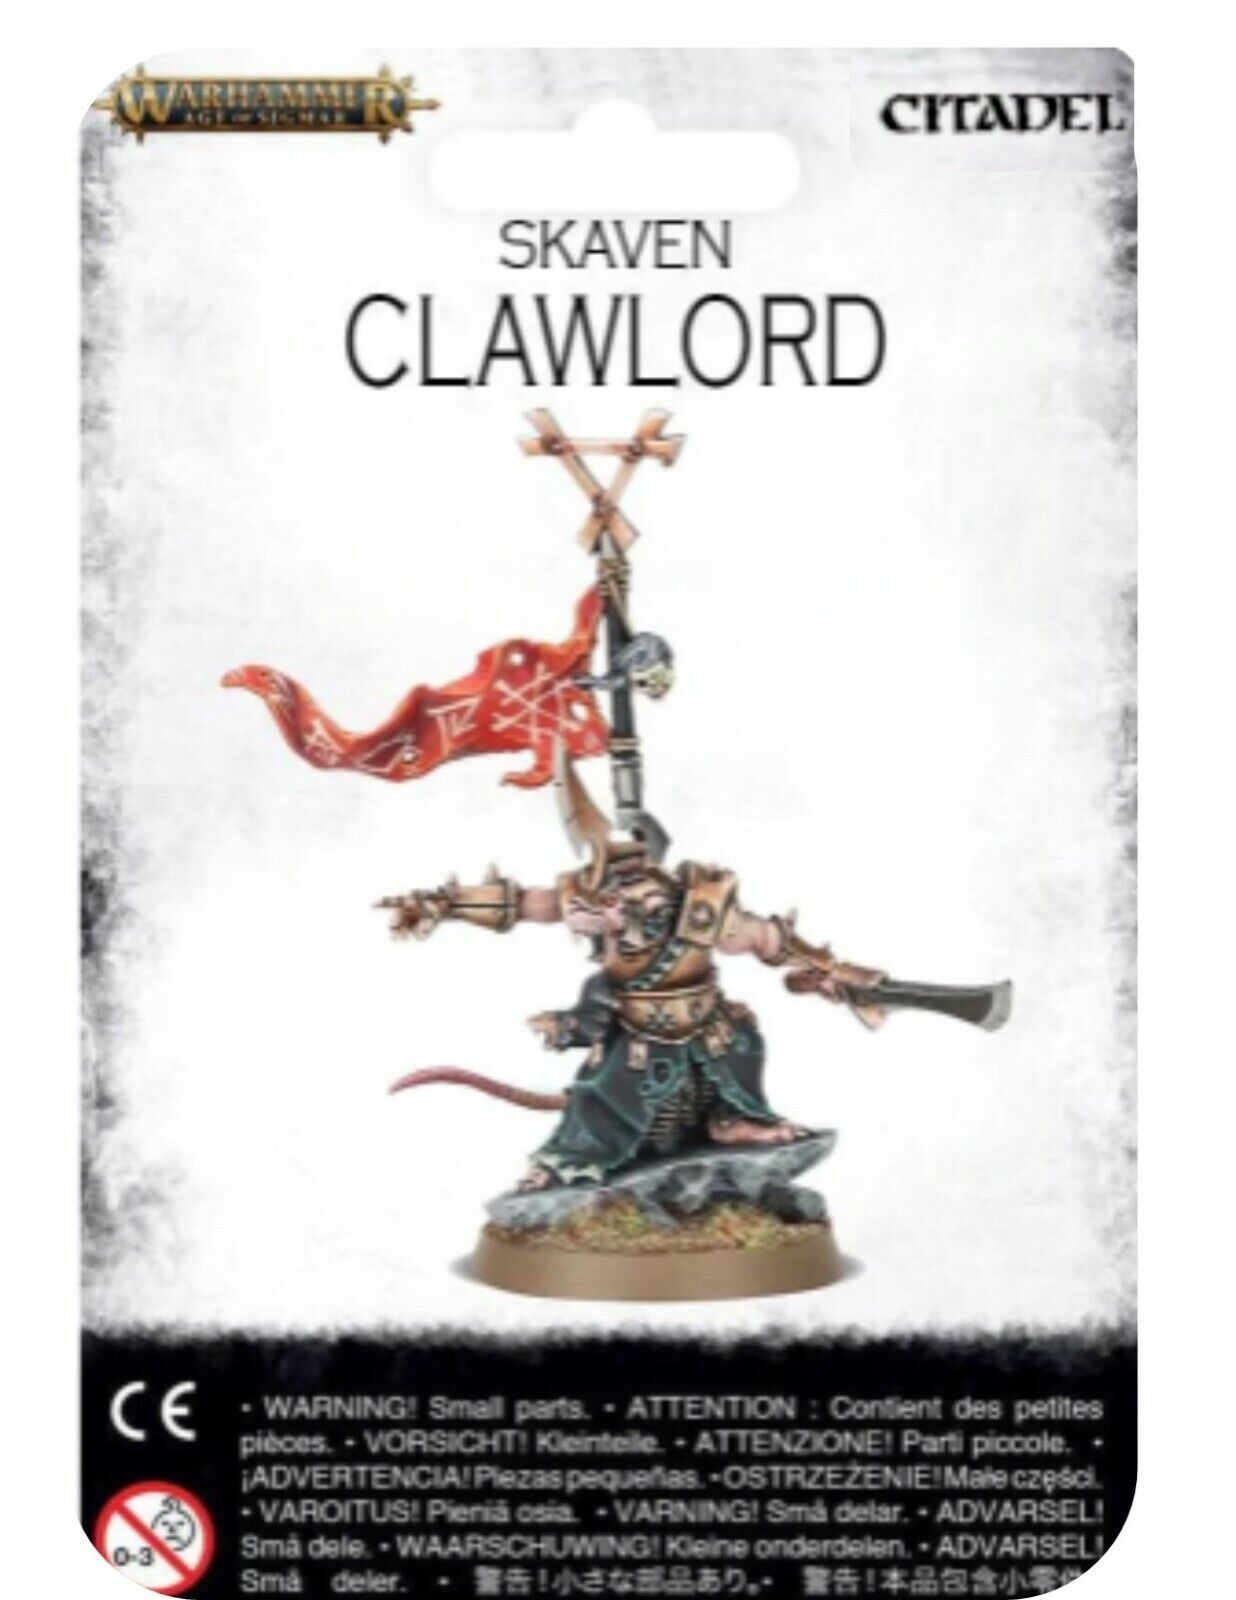 Clawlord or Warlord Skaven Warhammer Age of Sigmar AoS NIB!              WBGames